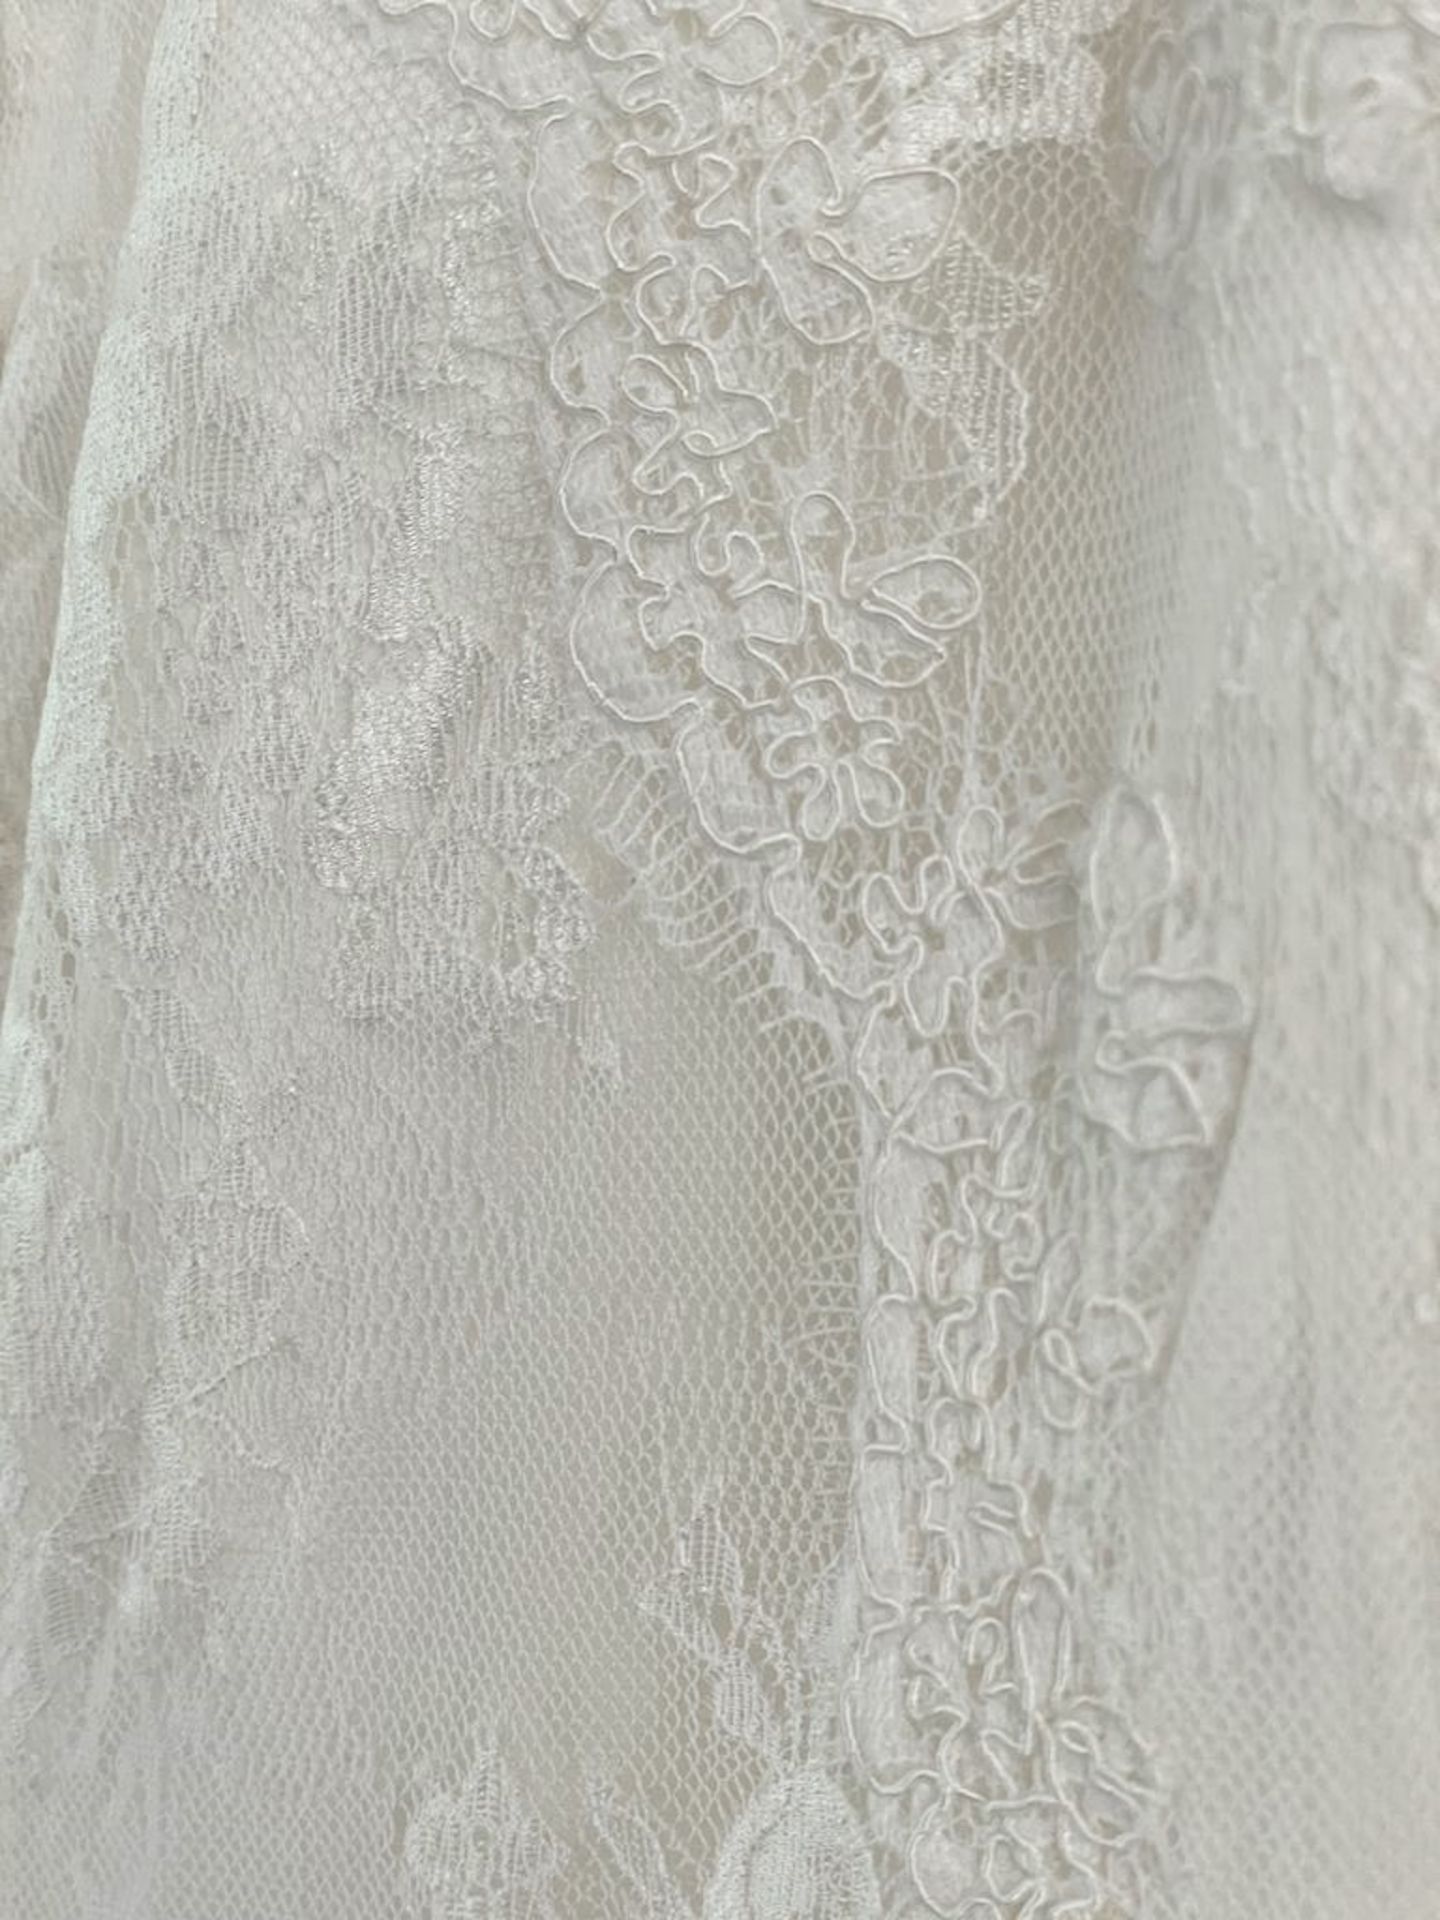 1 x ANNASUL Y 'Snow' Designer Wedding Dress Bridal Gown - Size: UK 12 - Original RRP £1,450 - Image 16 of 16